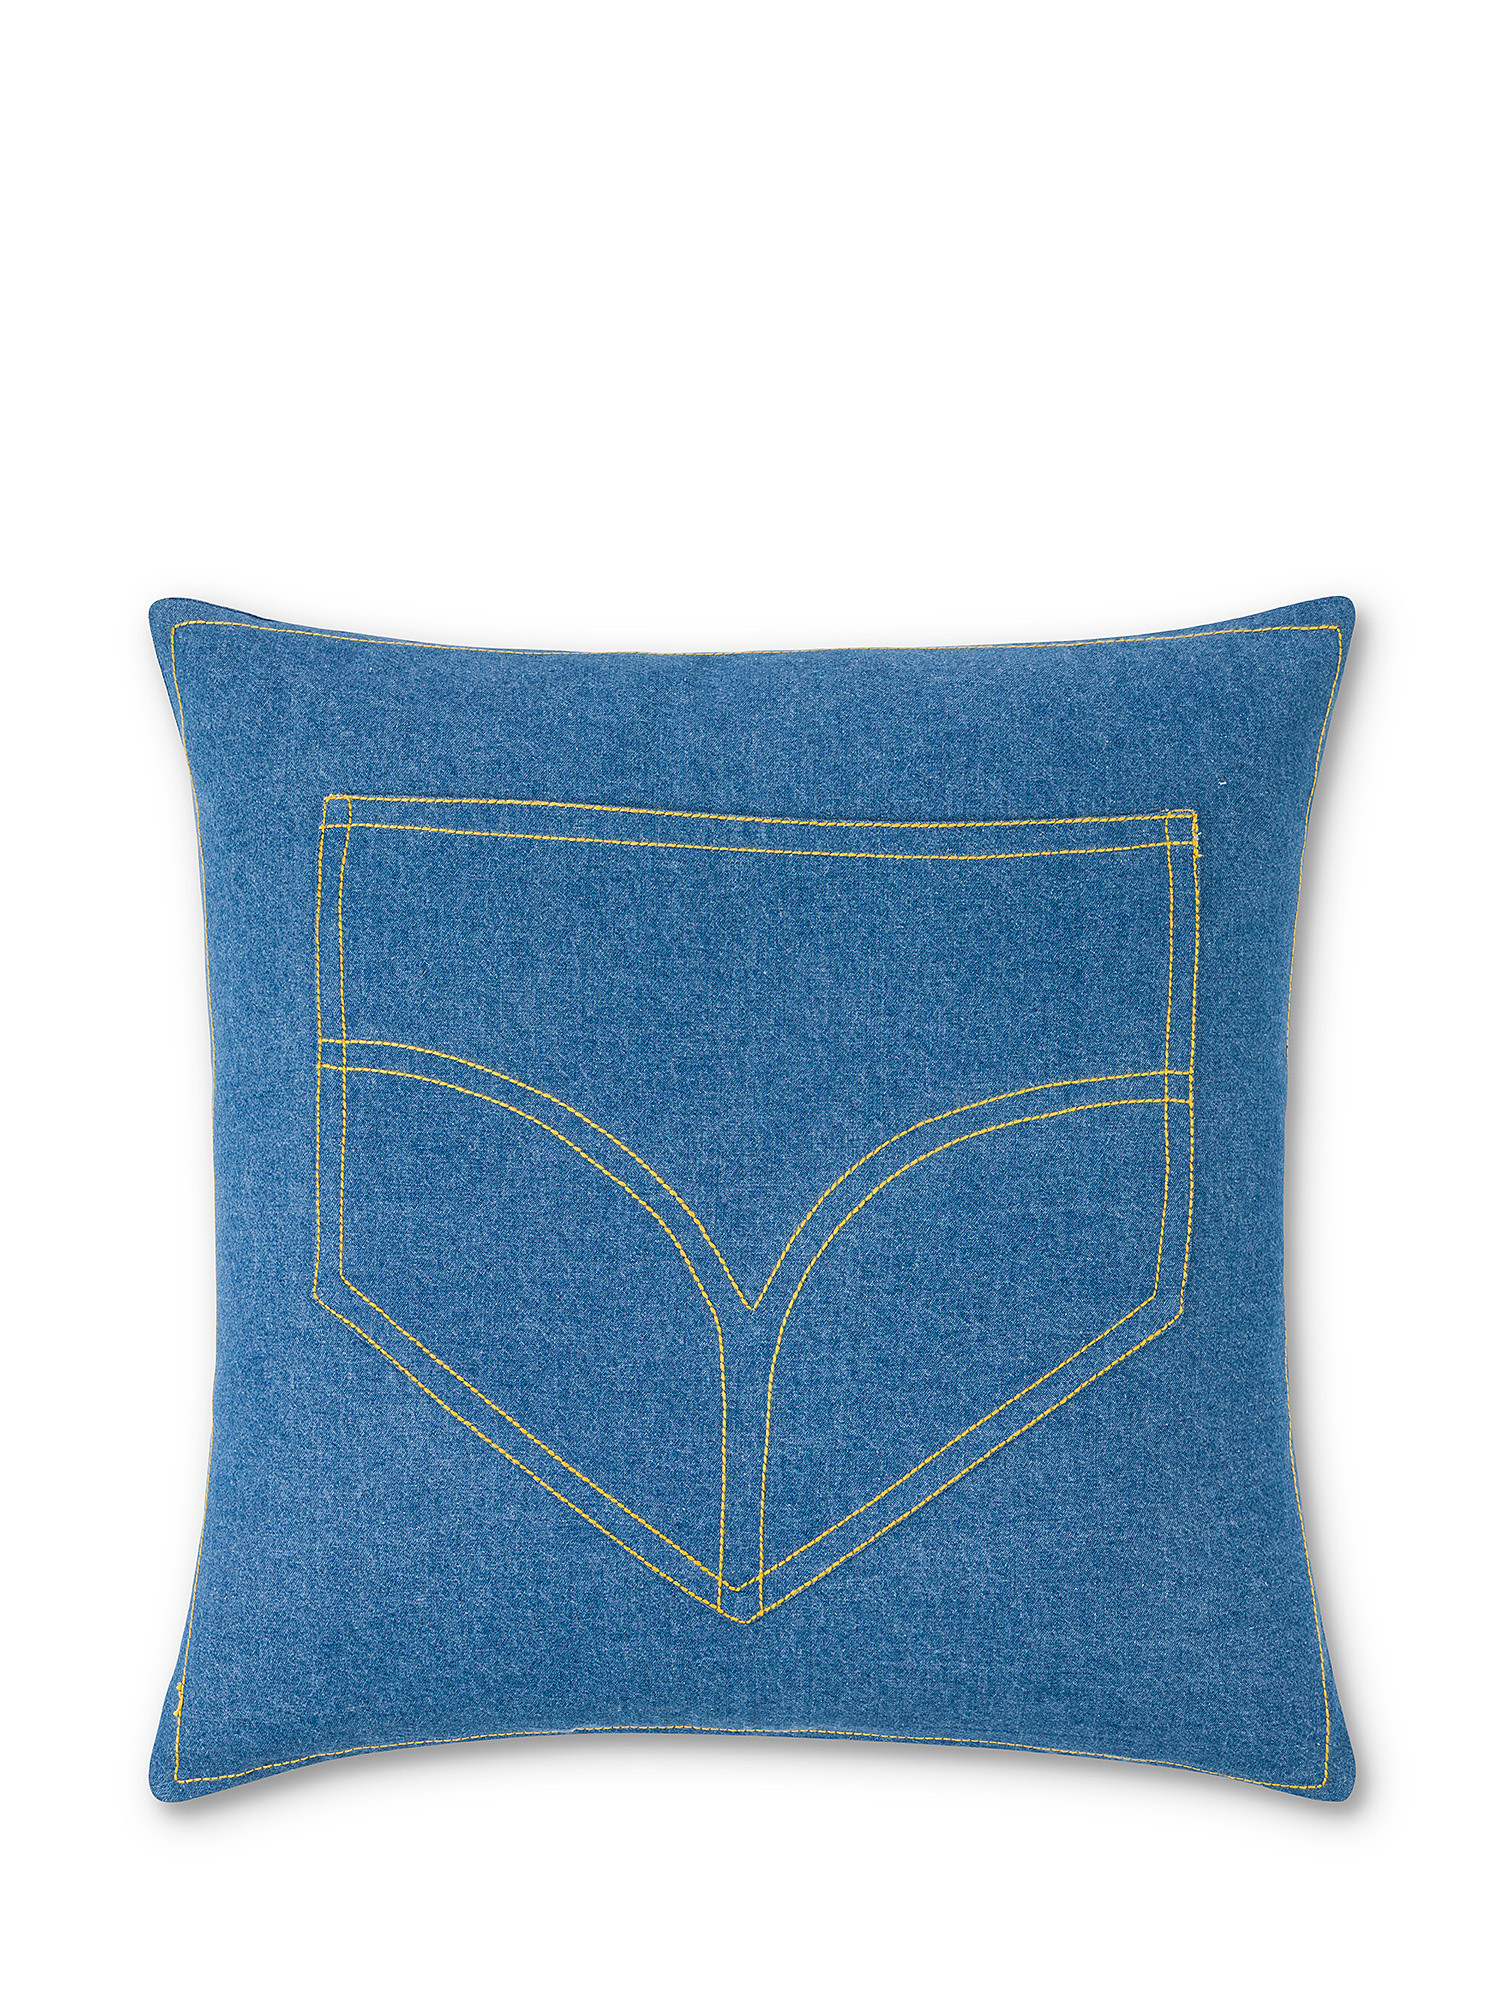 Cuscino cotone denim ricamo tasca 45x45cm, Azzurro, large image number 0